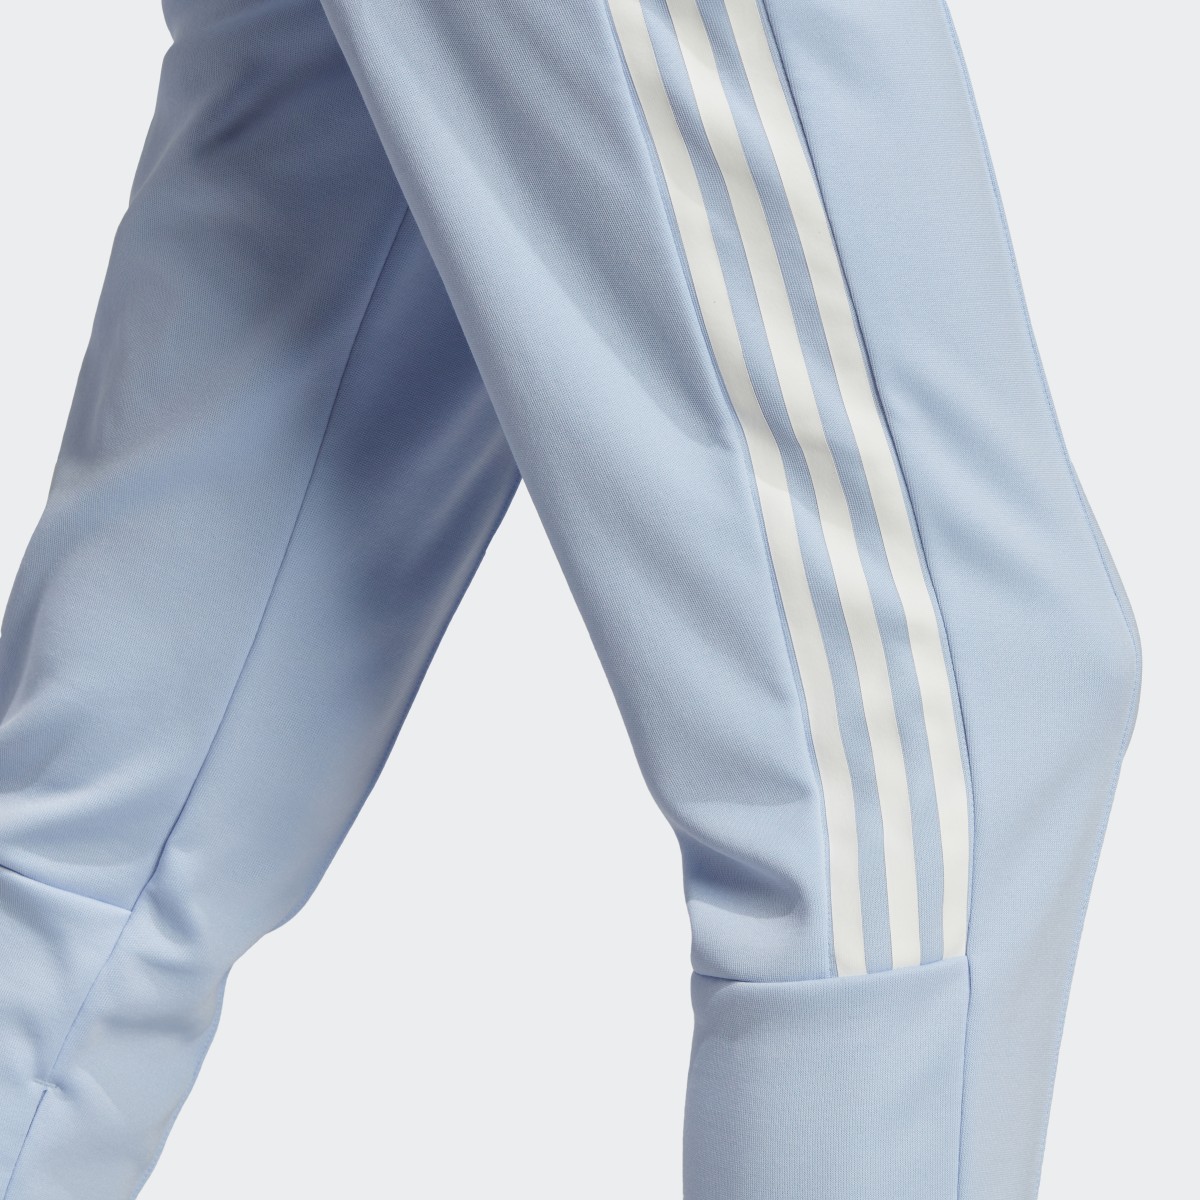 Adidas Tiro Suit Up Lifestyle Track Pants. 8